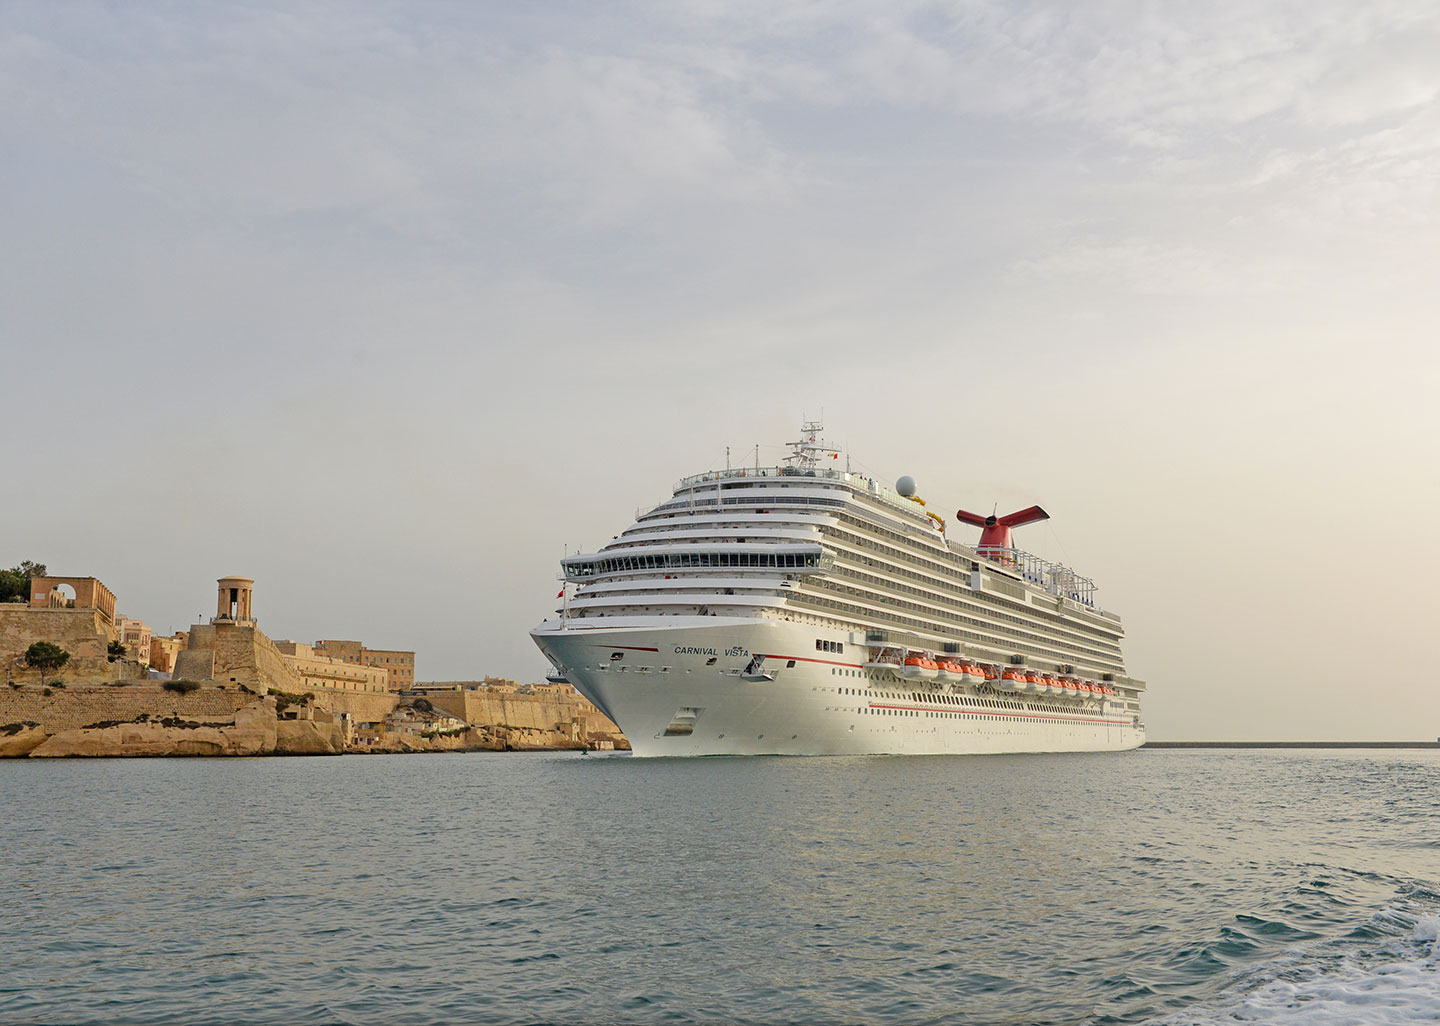 Valletta Cruise Port welcomes Carnival Vista